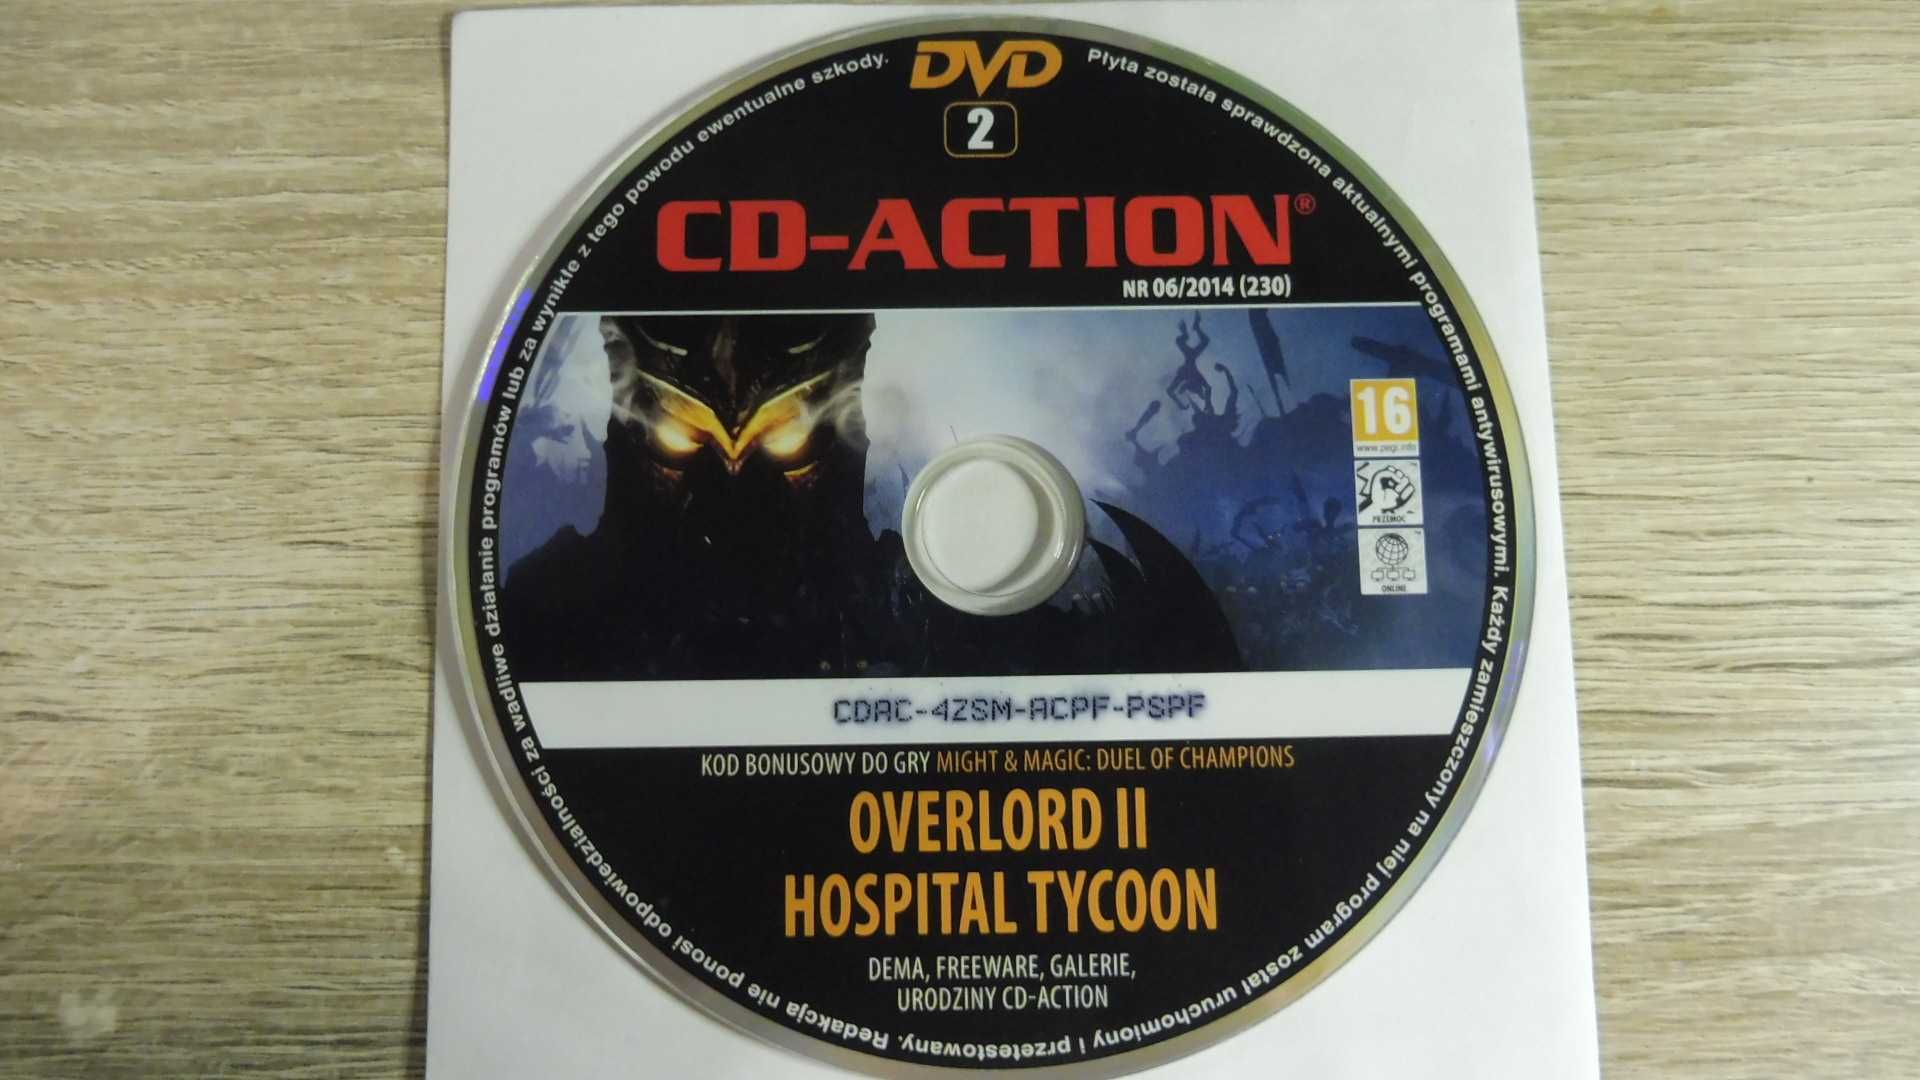 CD Action 06/2014 (230) - DVD 2 - Overlord II, Hospital Tycoon